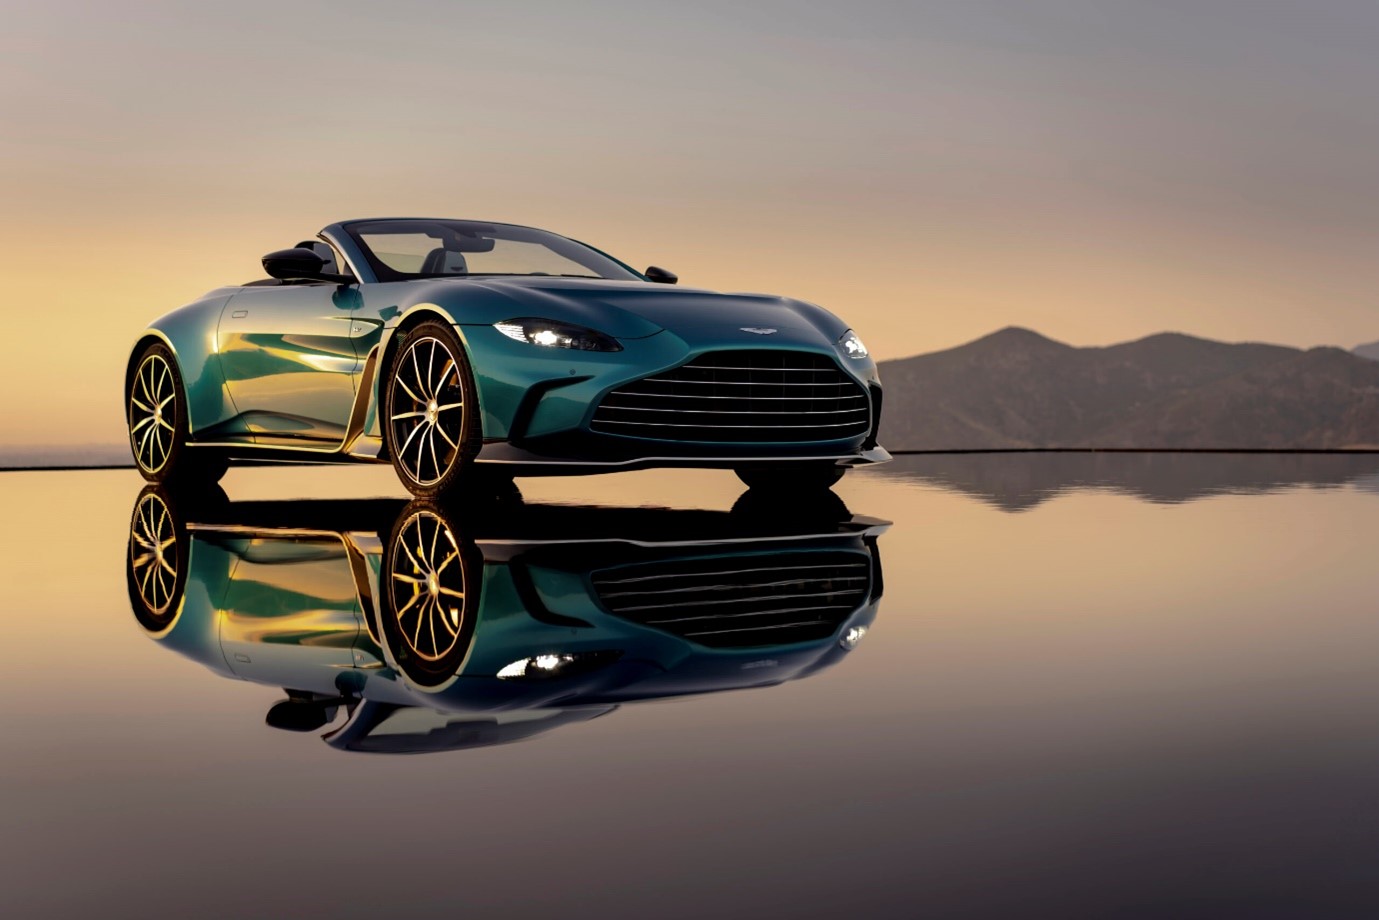 Why choose Carzilla Auto Service for an Aston Martin car service in Dubai